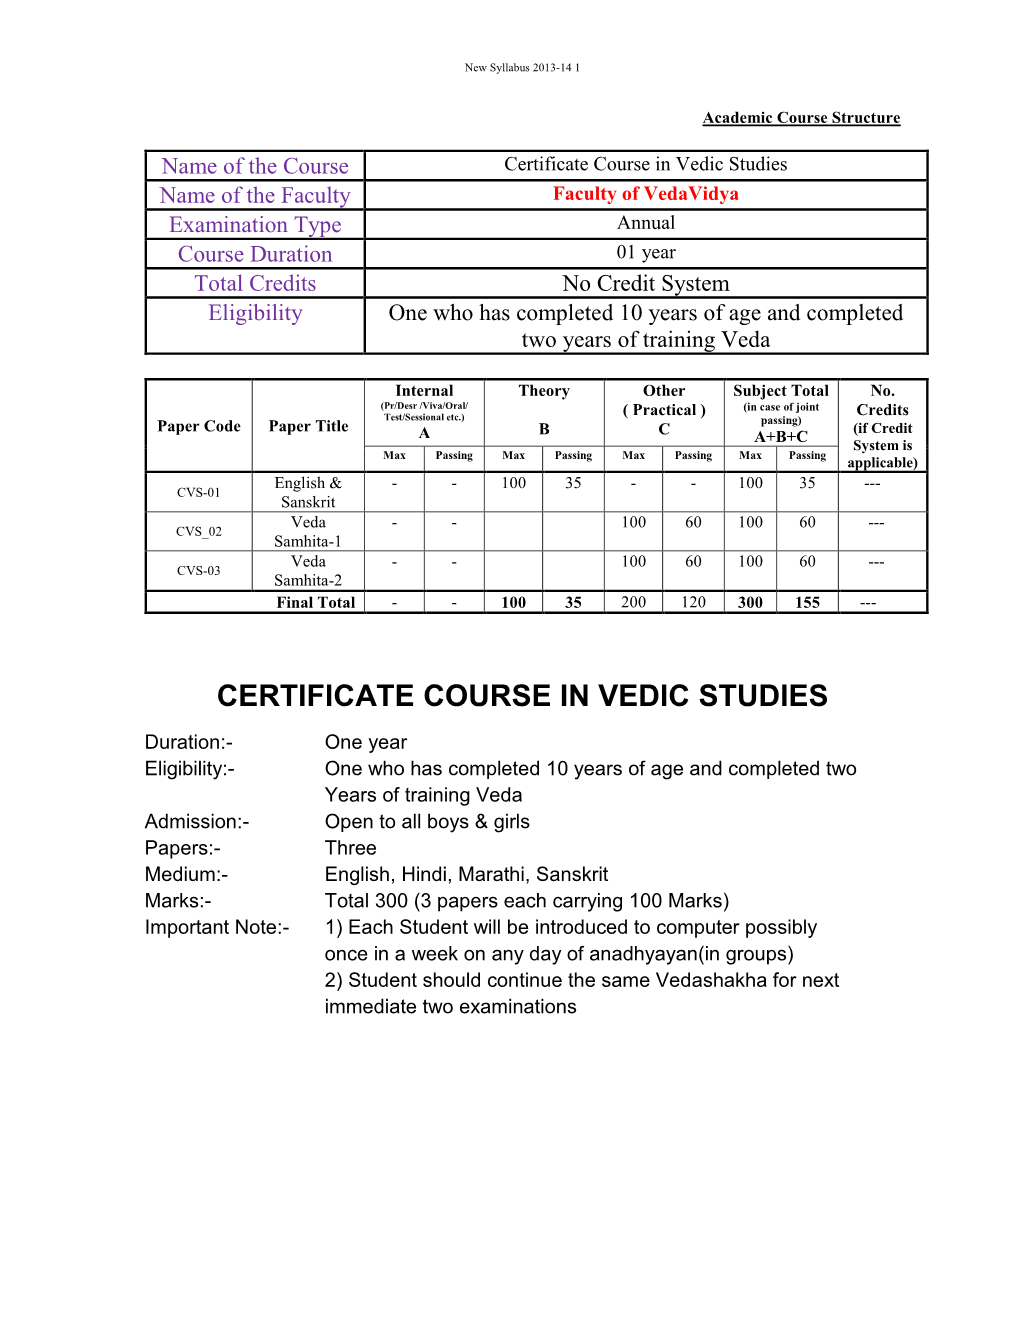 Certificate Course in Vedic Studies